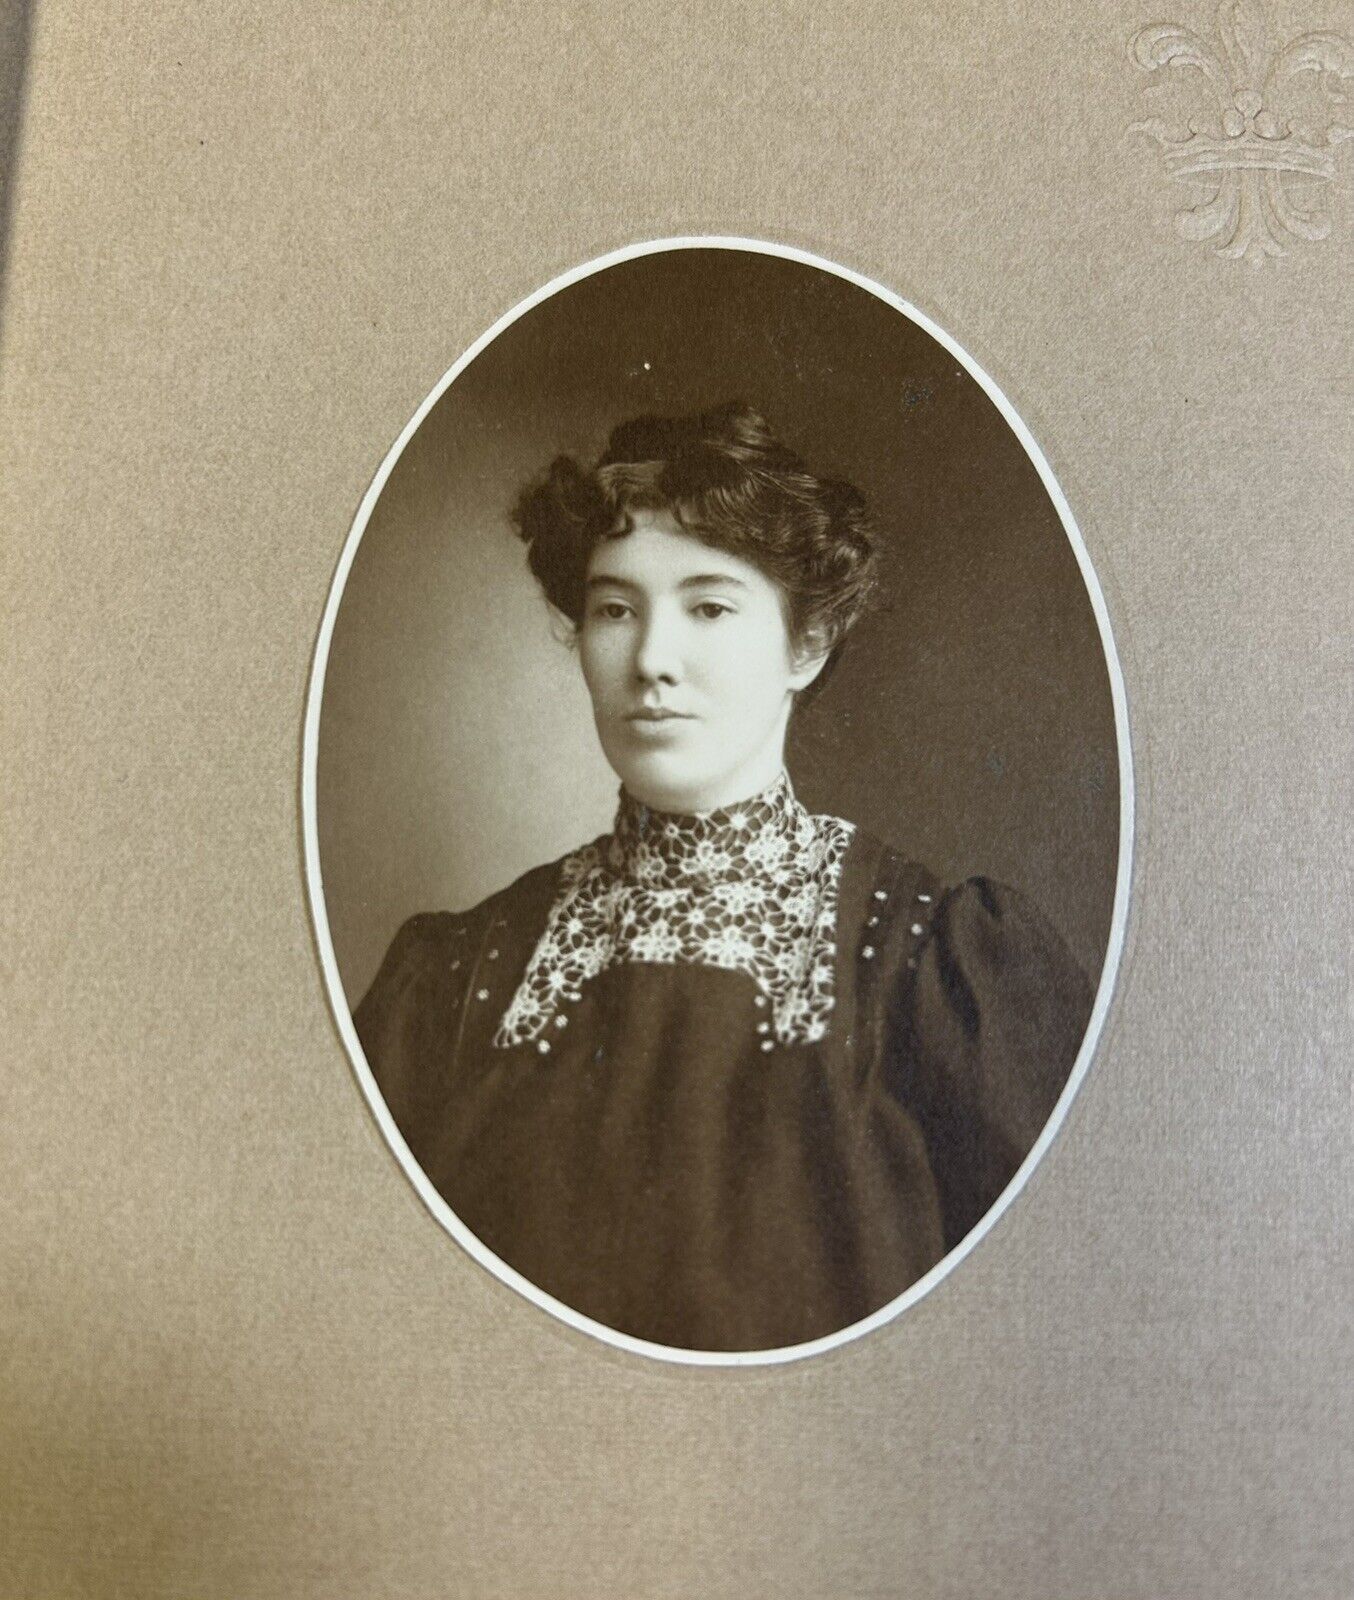 Antique 1800s Oval Portrait, Stern Woman in Frilly Dress, Fairfield Iowa Antique